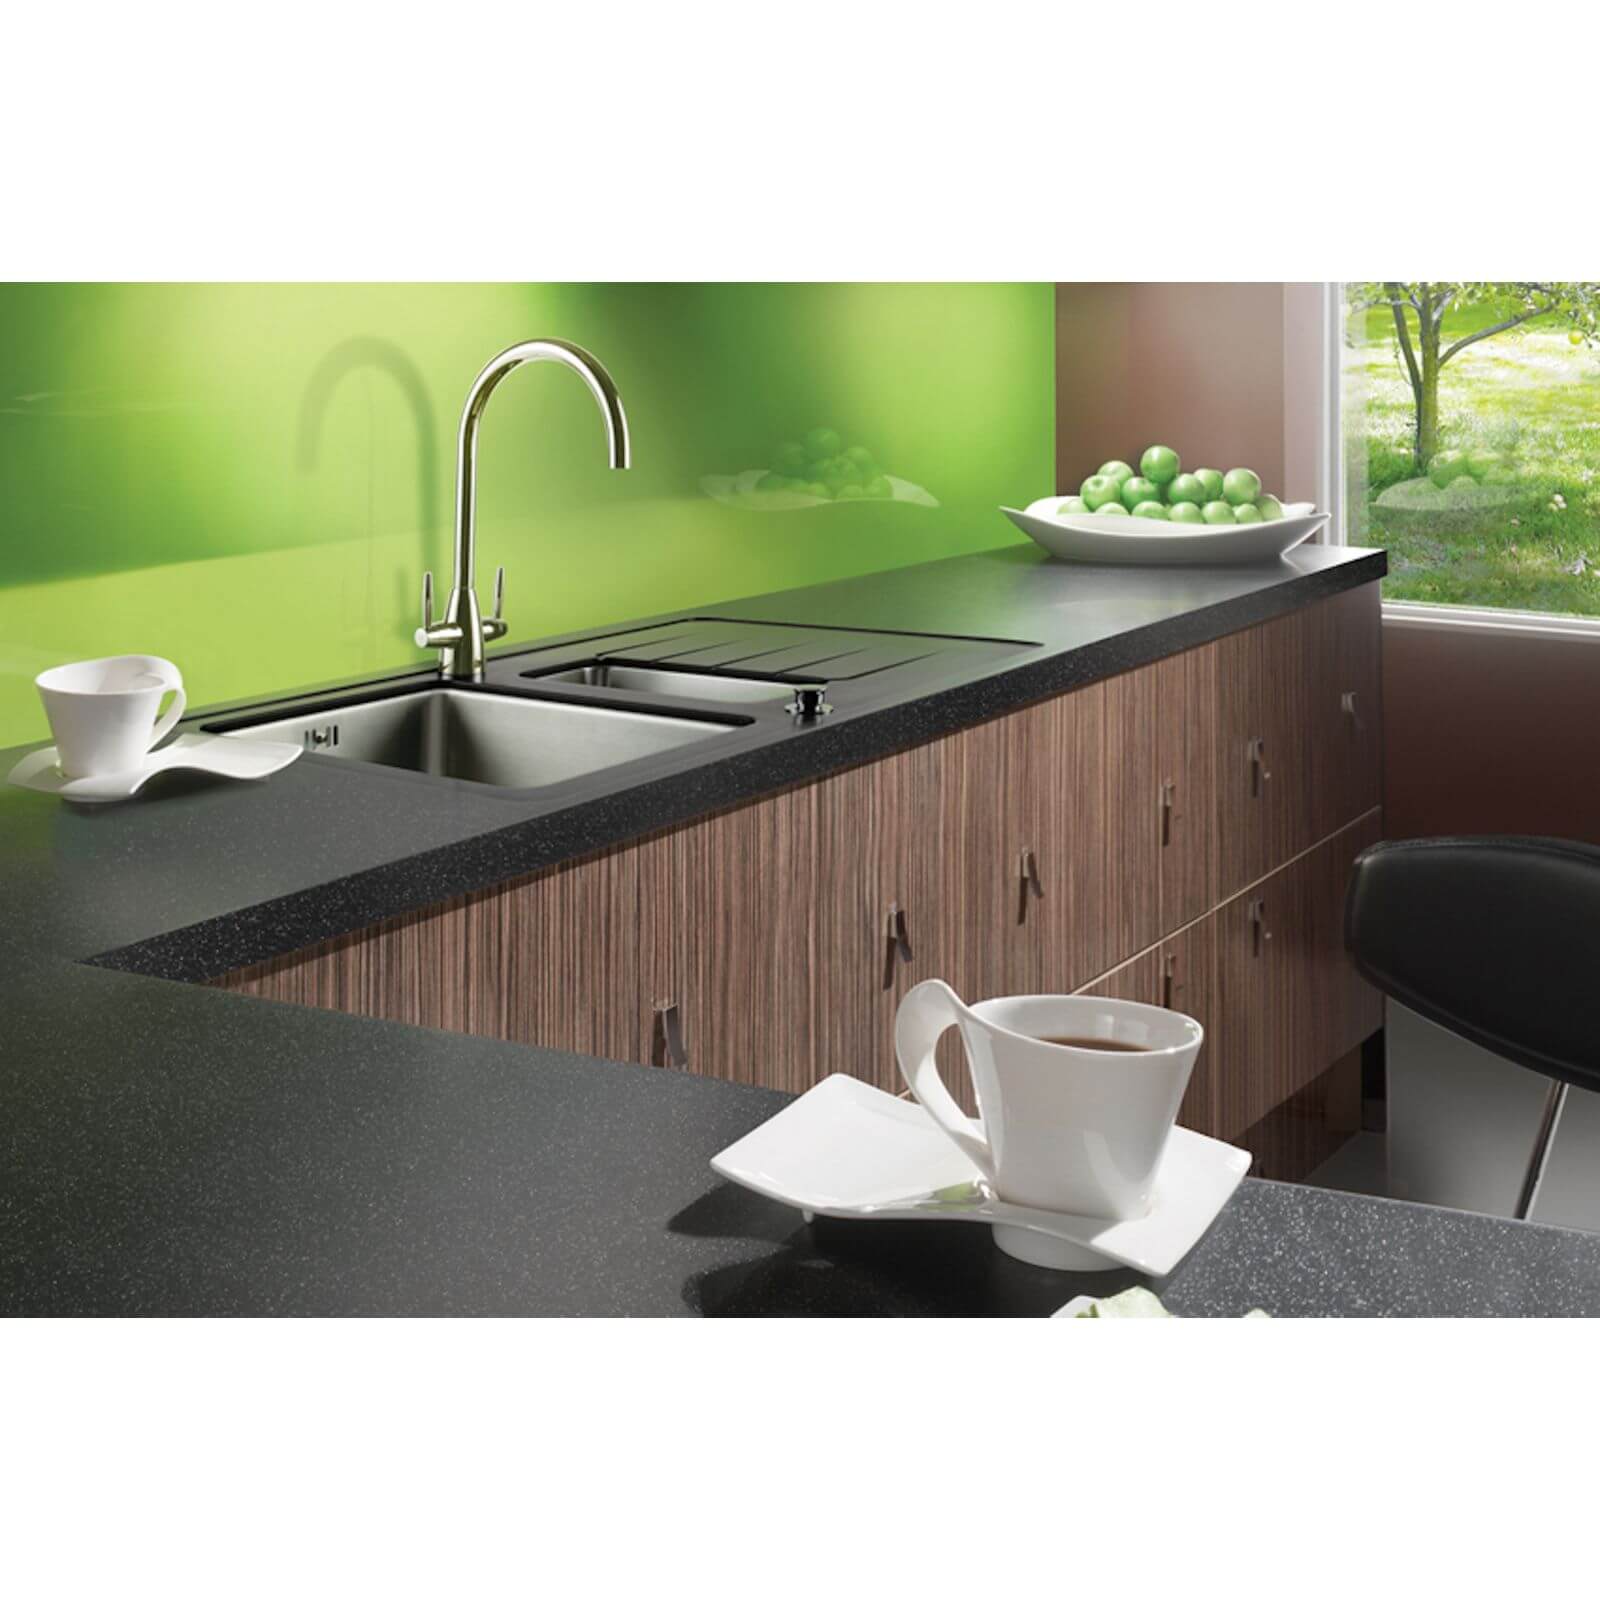 Maia Galaxy Kitchen Sink Worktop - Universal Super Large Bowl - 3600 x 650 x 42mm